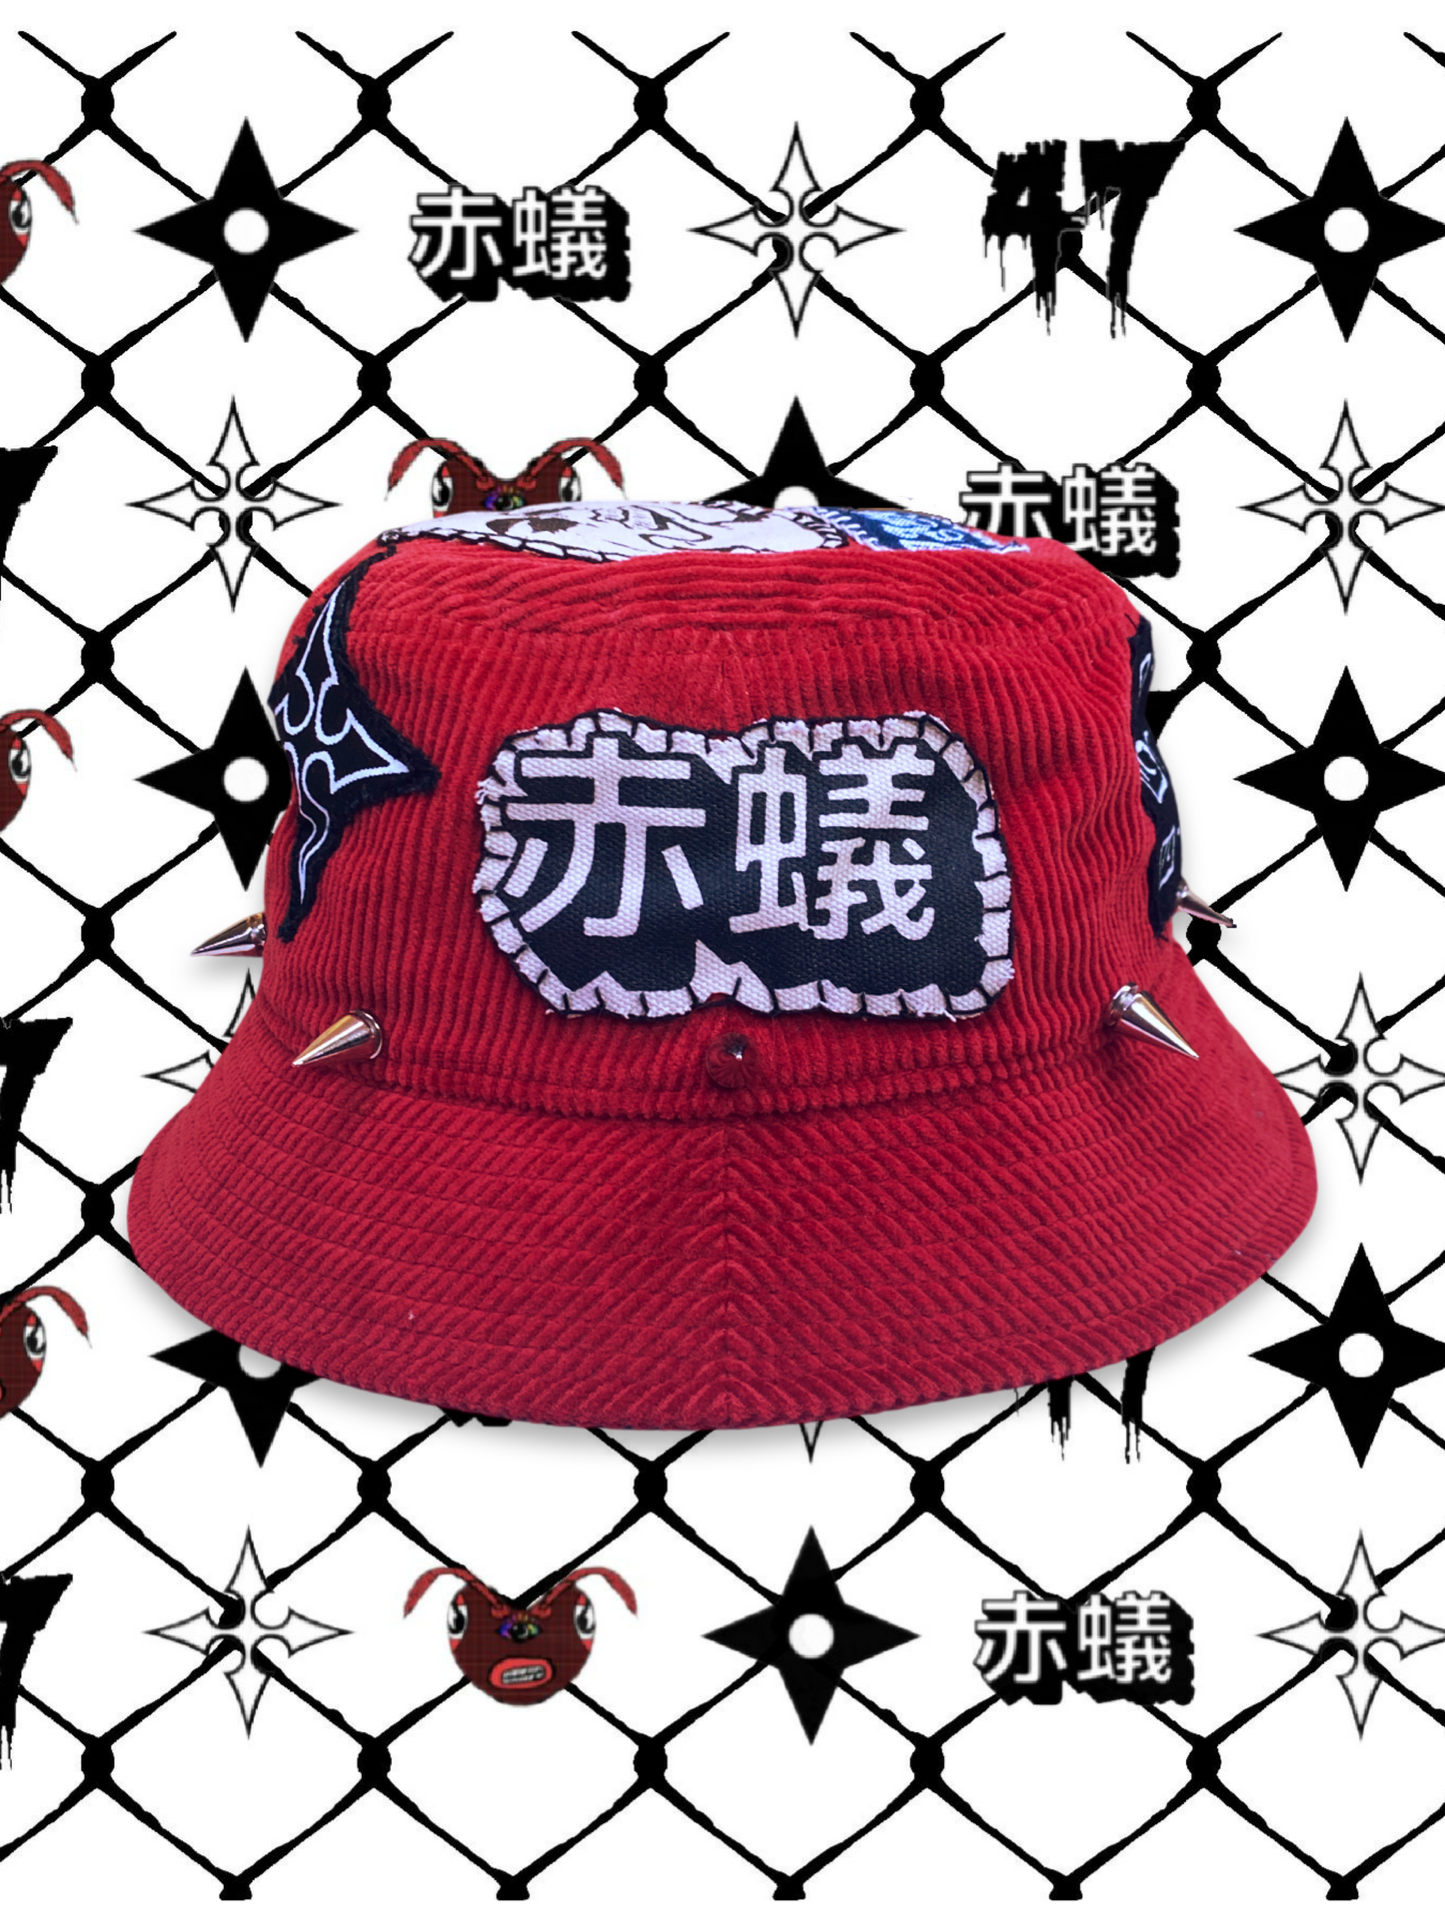 1/1 "Shuriken Eyes" Bucket Hat